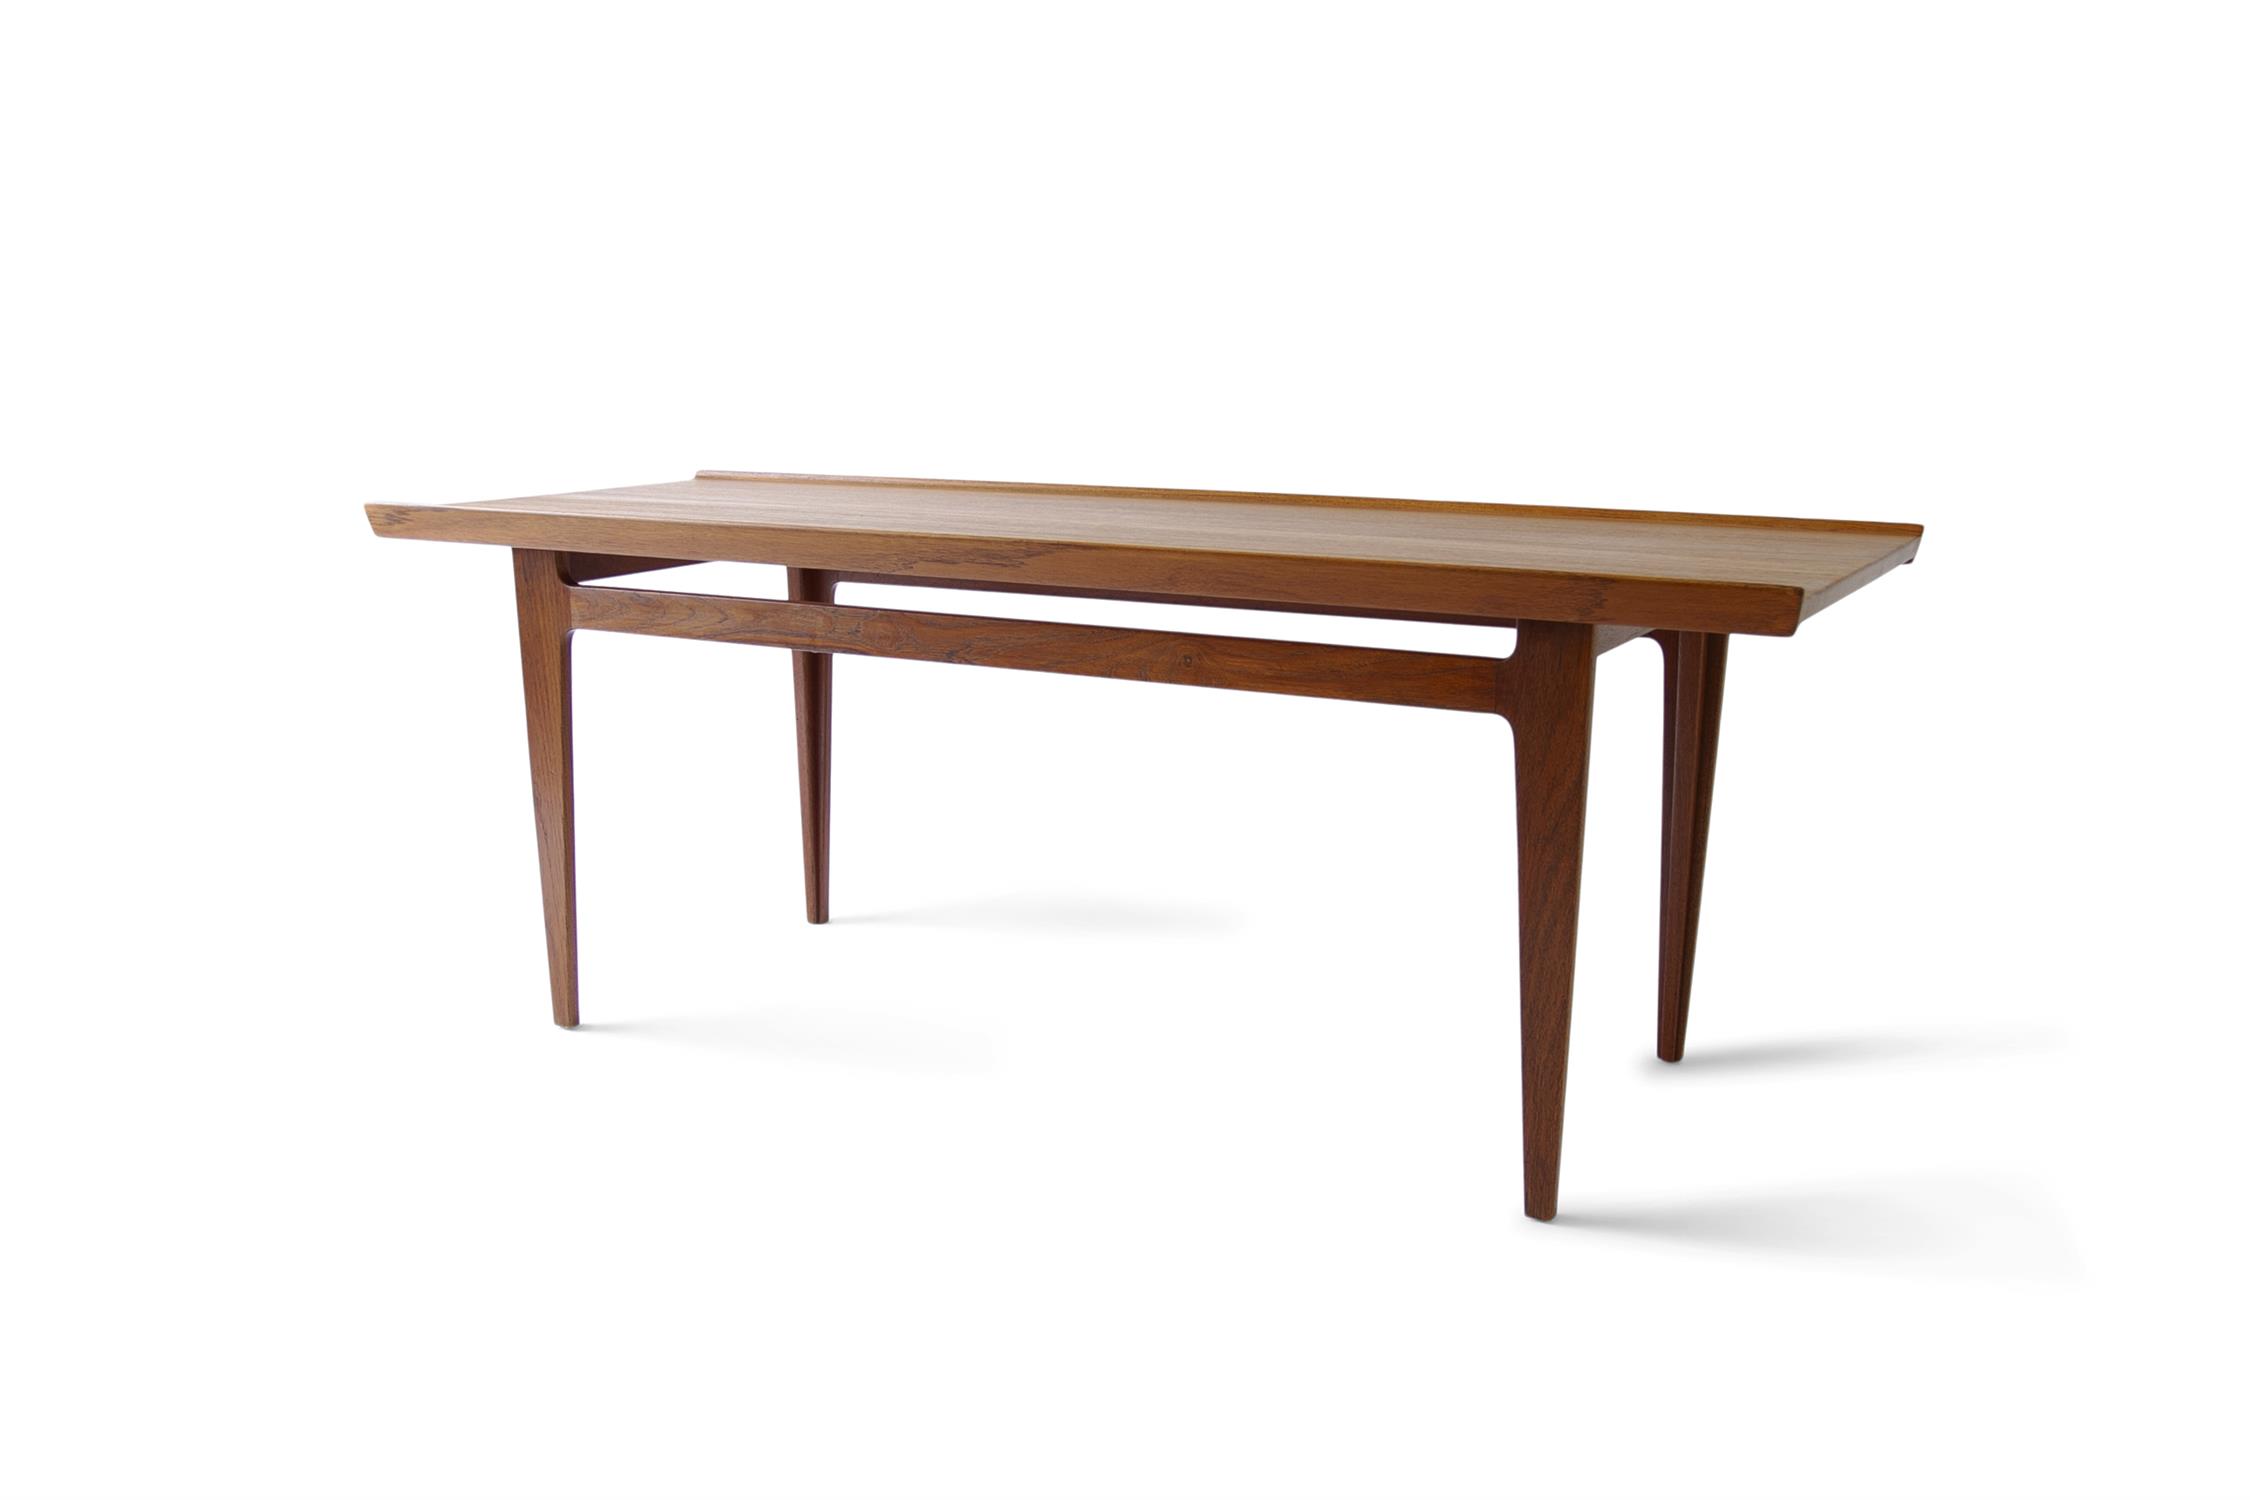 FINN JUHL (1912 - 1989) A teak coffee table by Finn Juhl for France & Sons. Denmark, c.1960. - Image 2 of 4